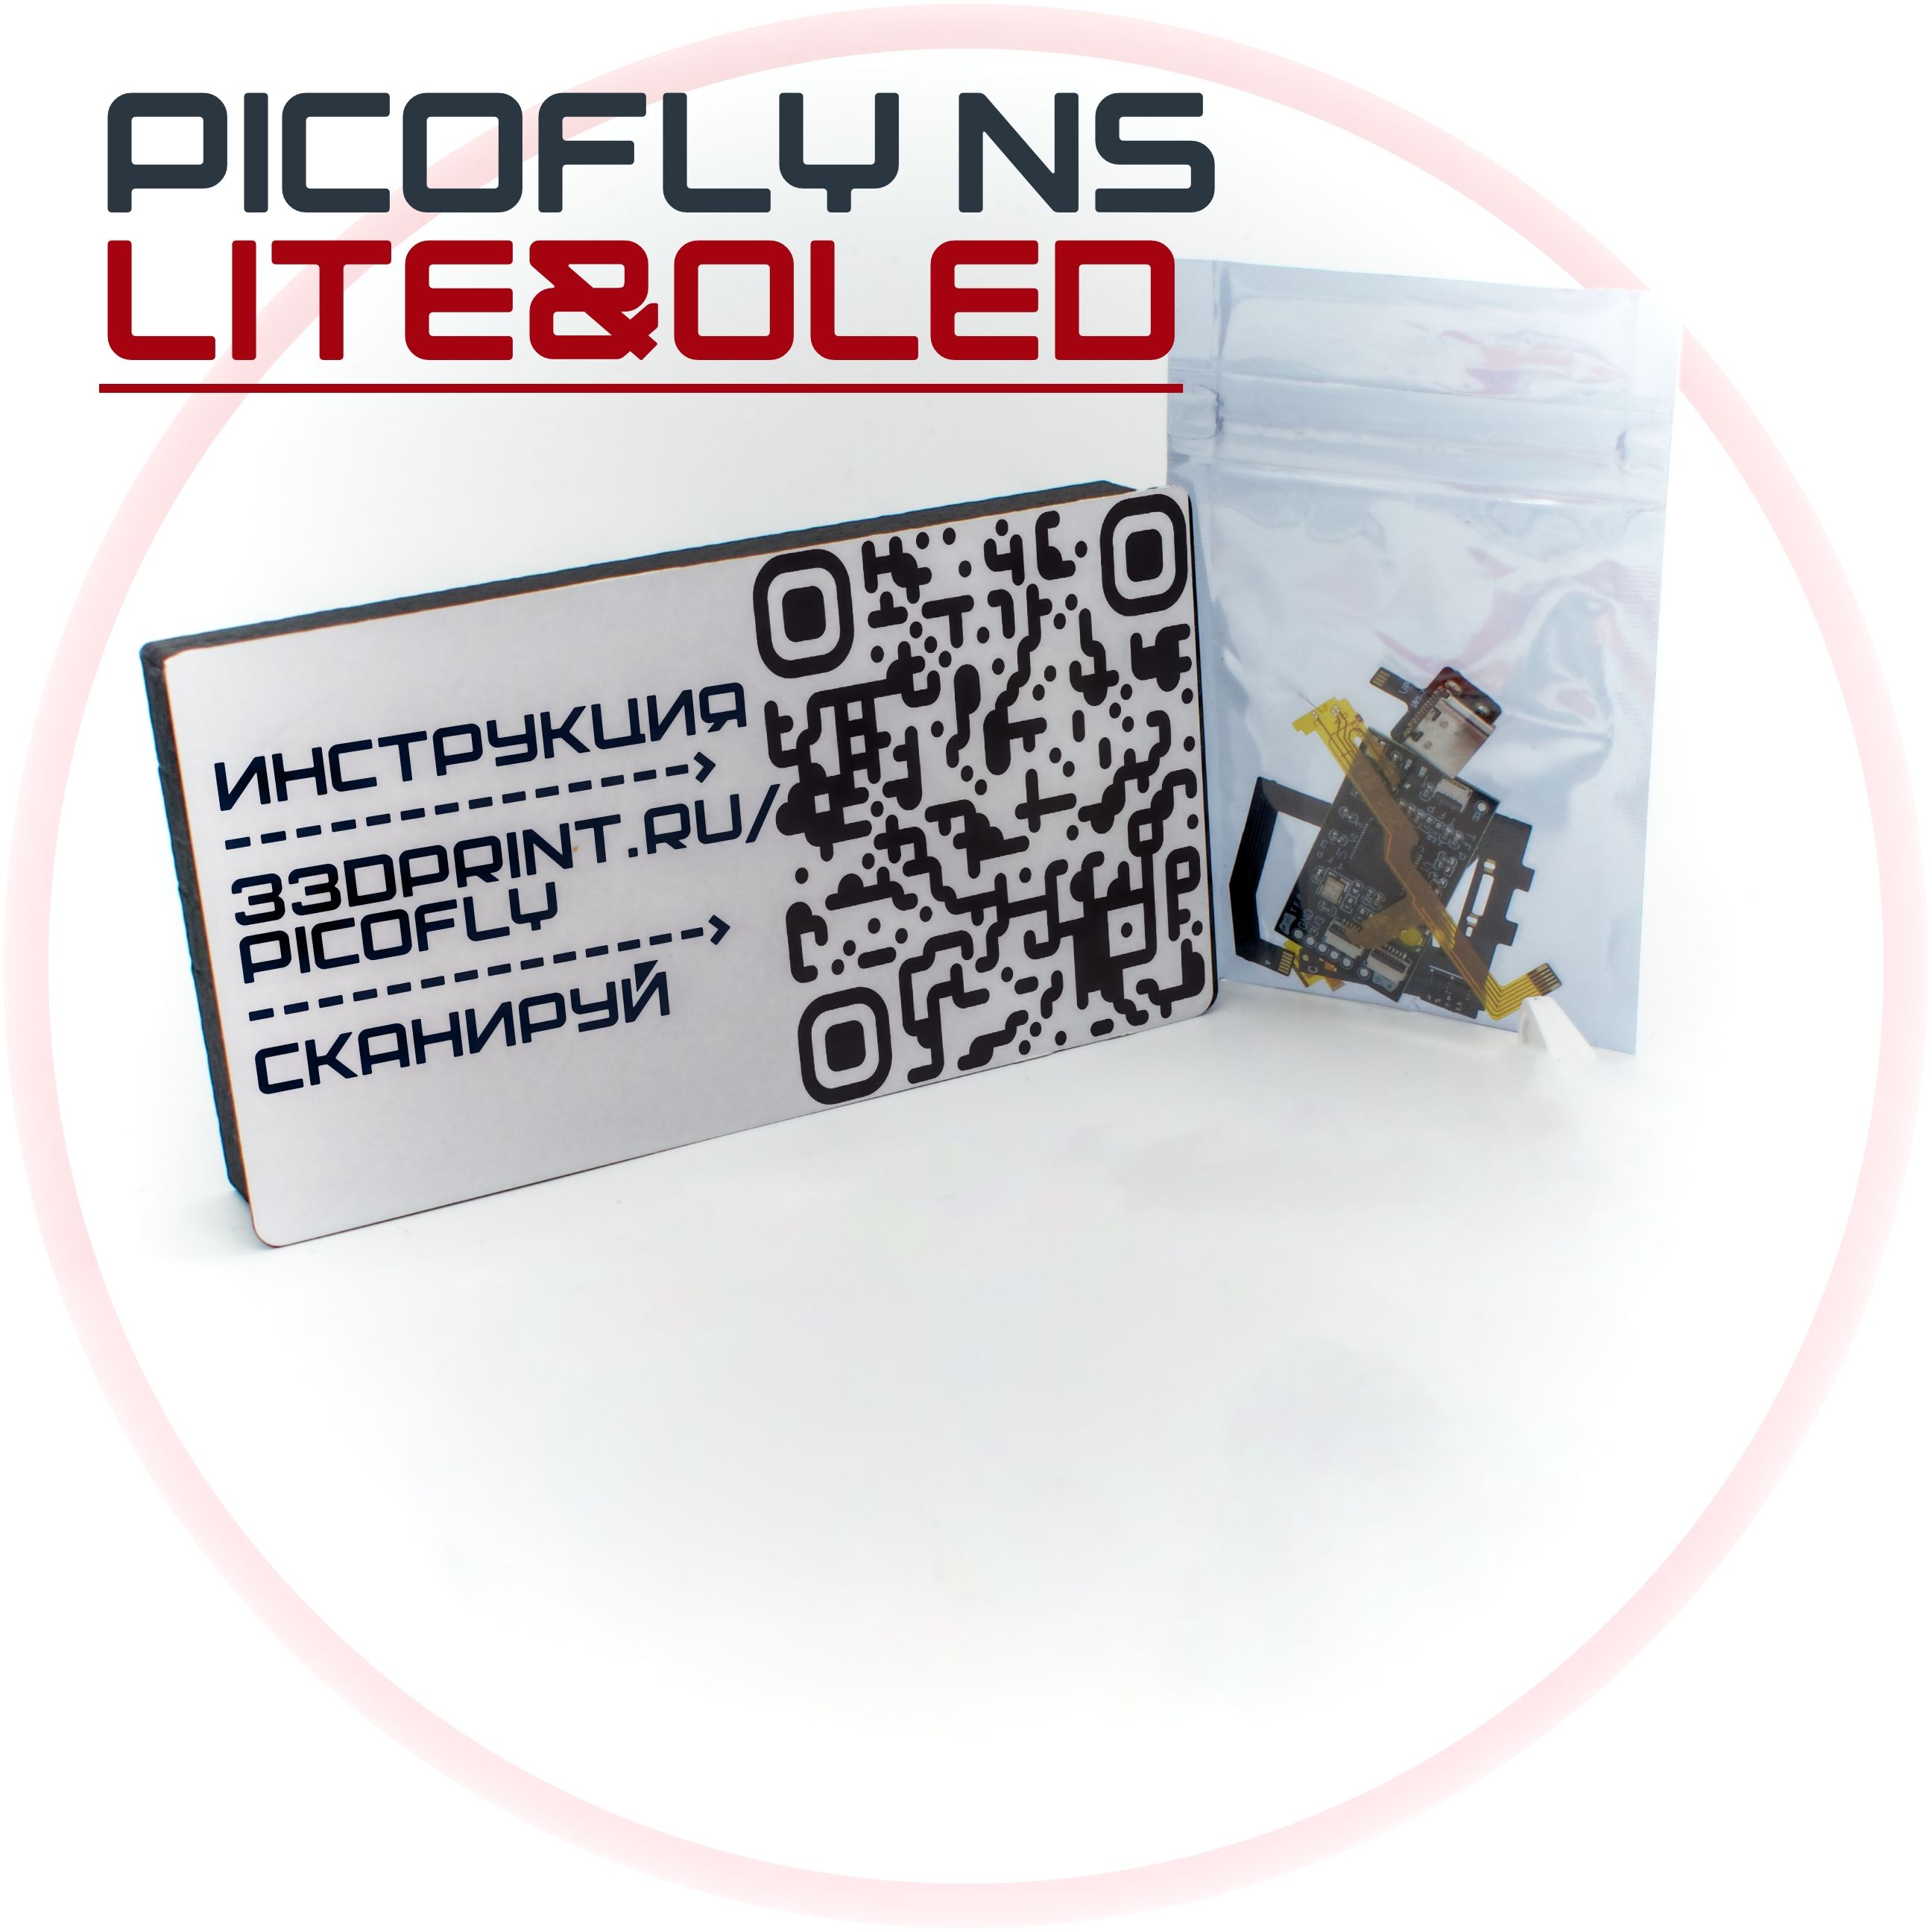 Picofly nintendo switch. HWFLY rp2040 Lite. Picofly Switch. Конденсаторы на rp2040 Nintendo Switch. Установка picofly 2040 Nintendo Switch Lite.